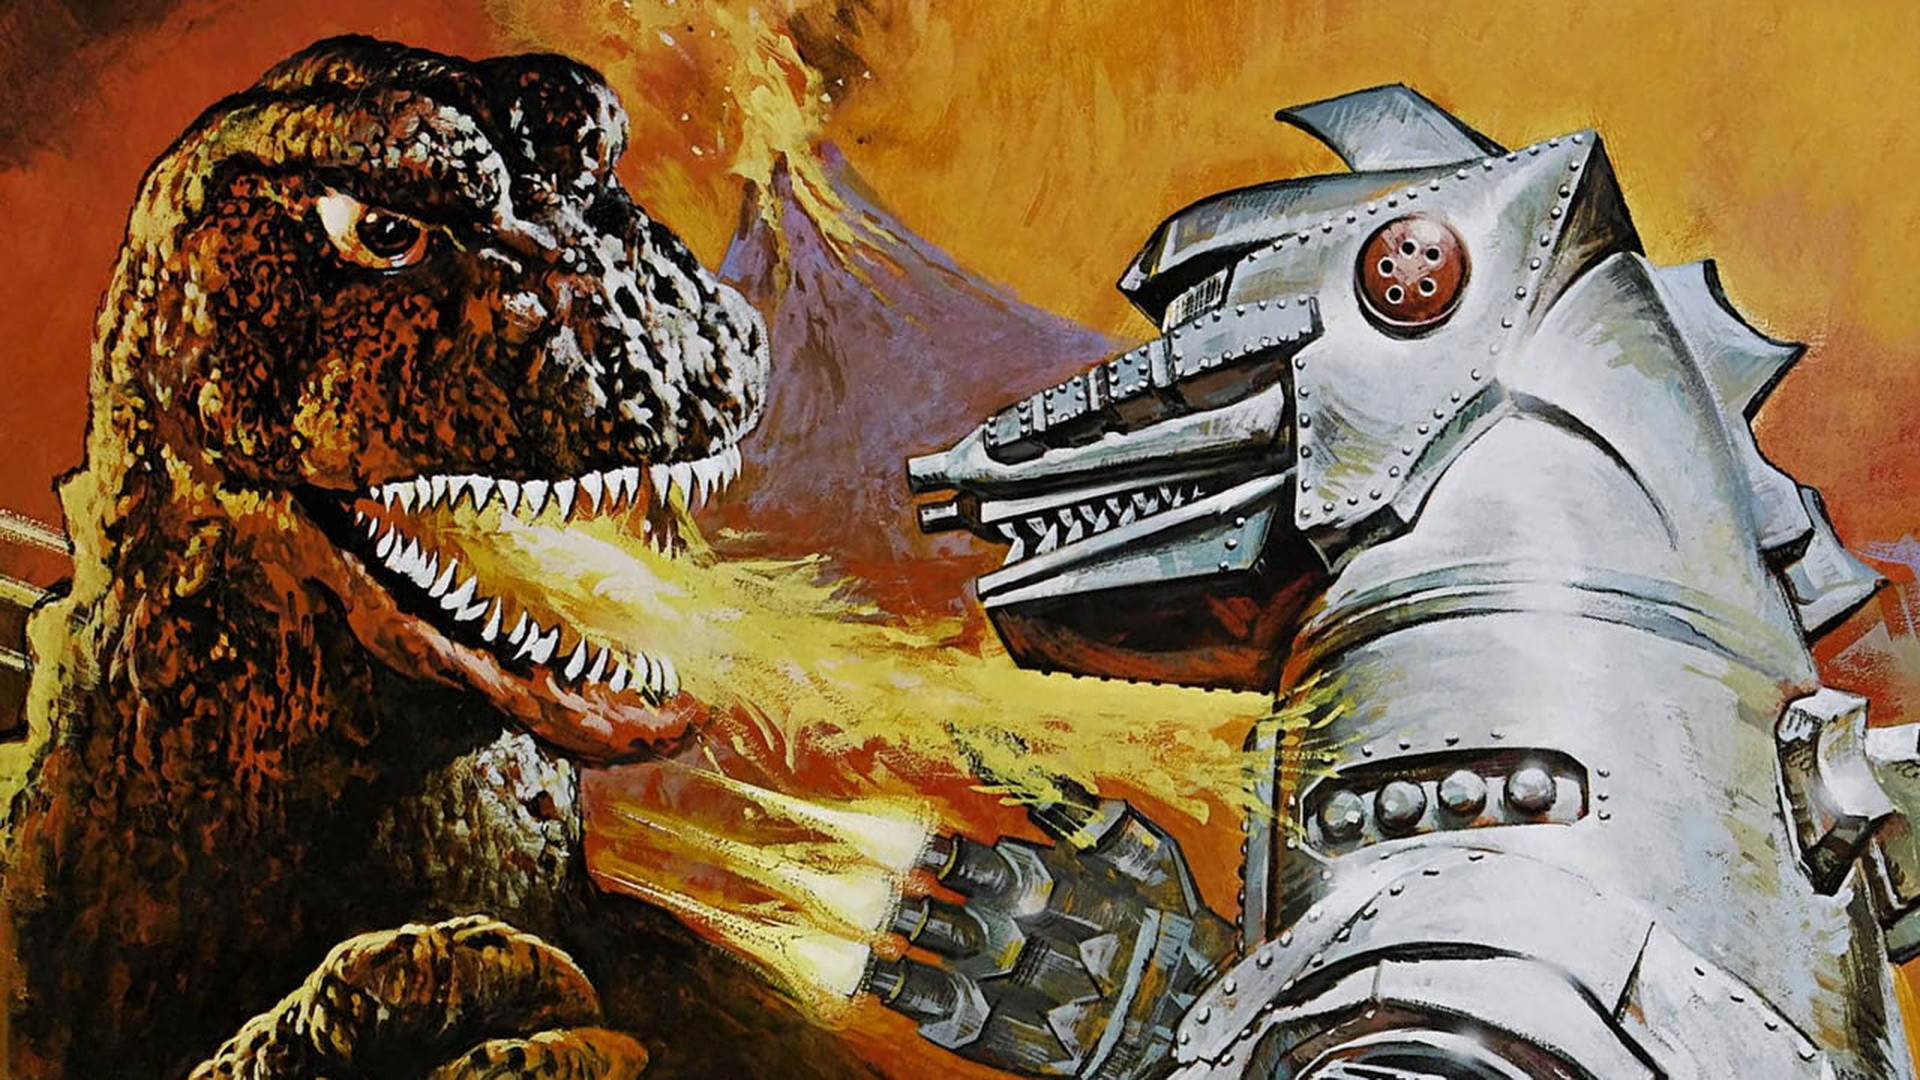 1920x1080 Godzilla Vs. Mechagodzilla HD Wallpaper | Background Image |  |  ID:411075 - Wallpaper Abyss